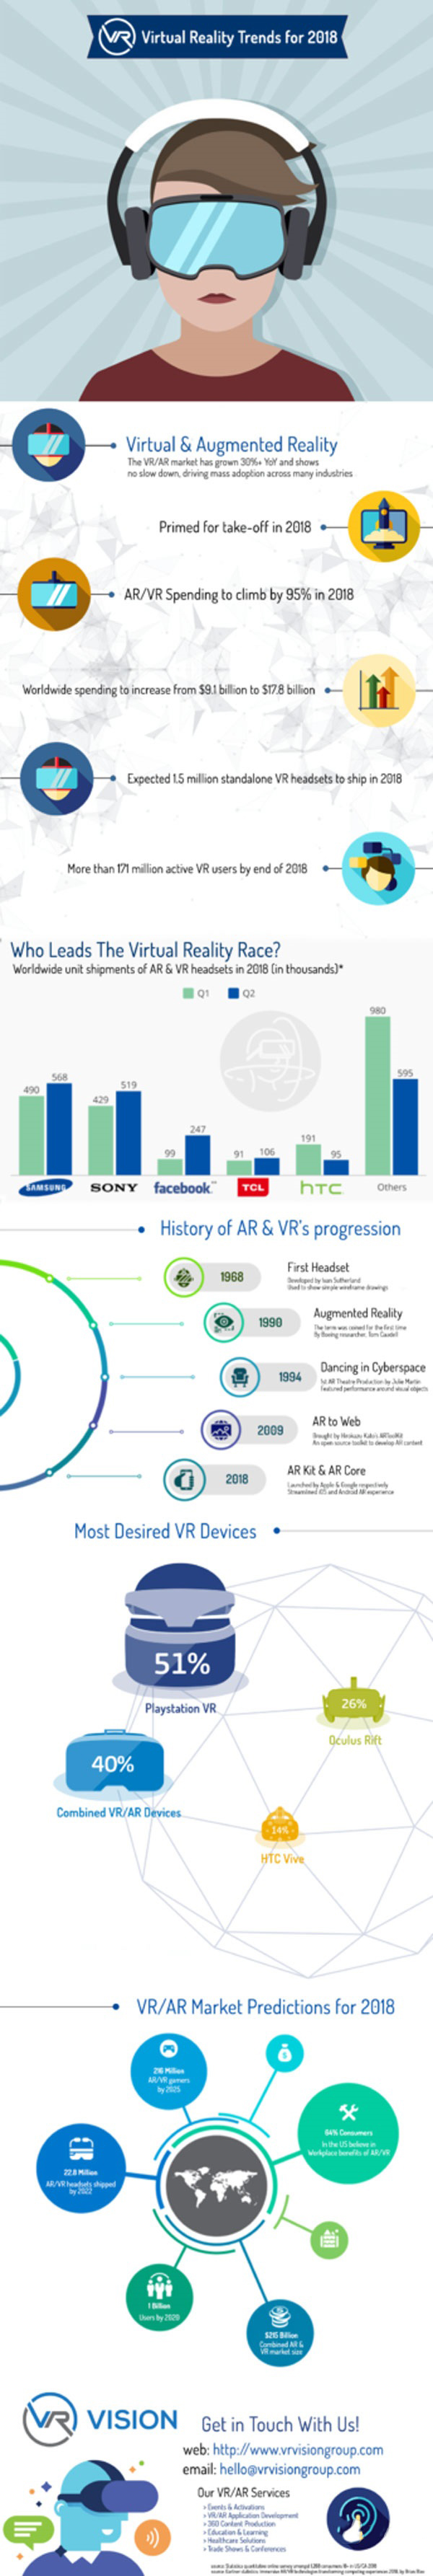 VR Vision最新报告：PSVR依然是最受欢迎的VR设备.jpg